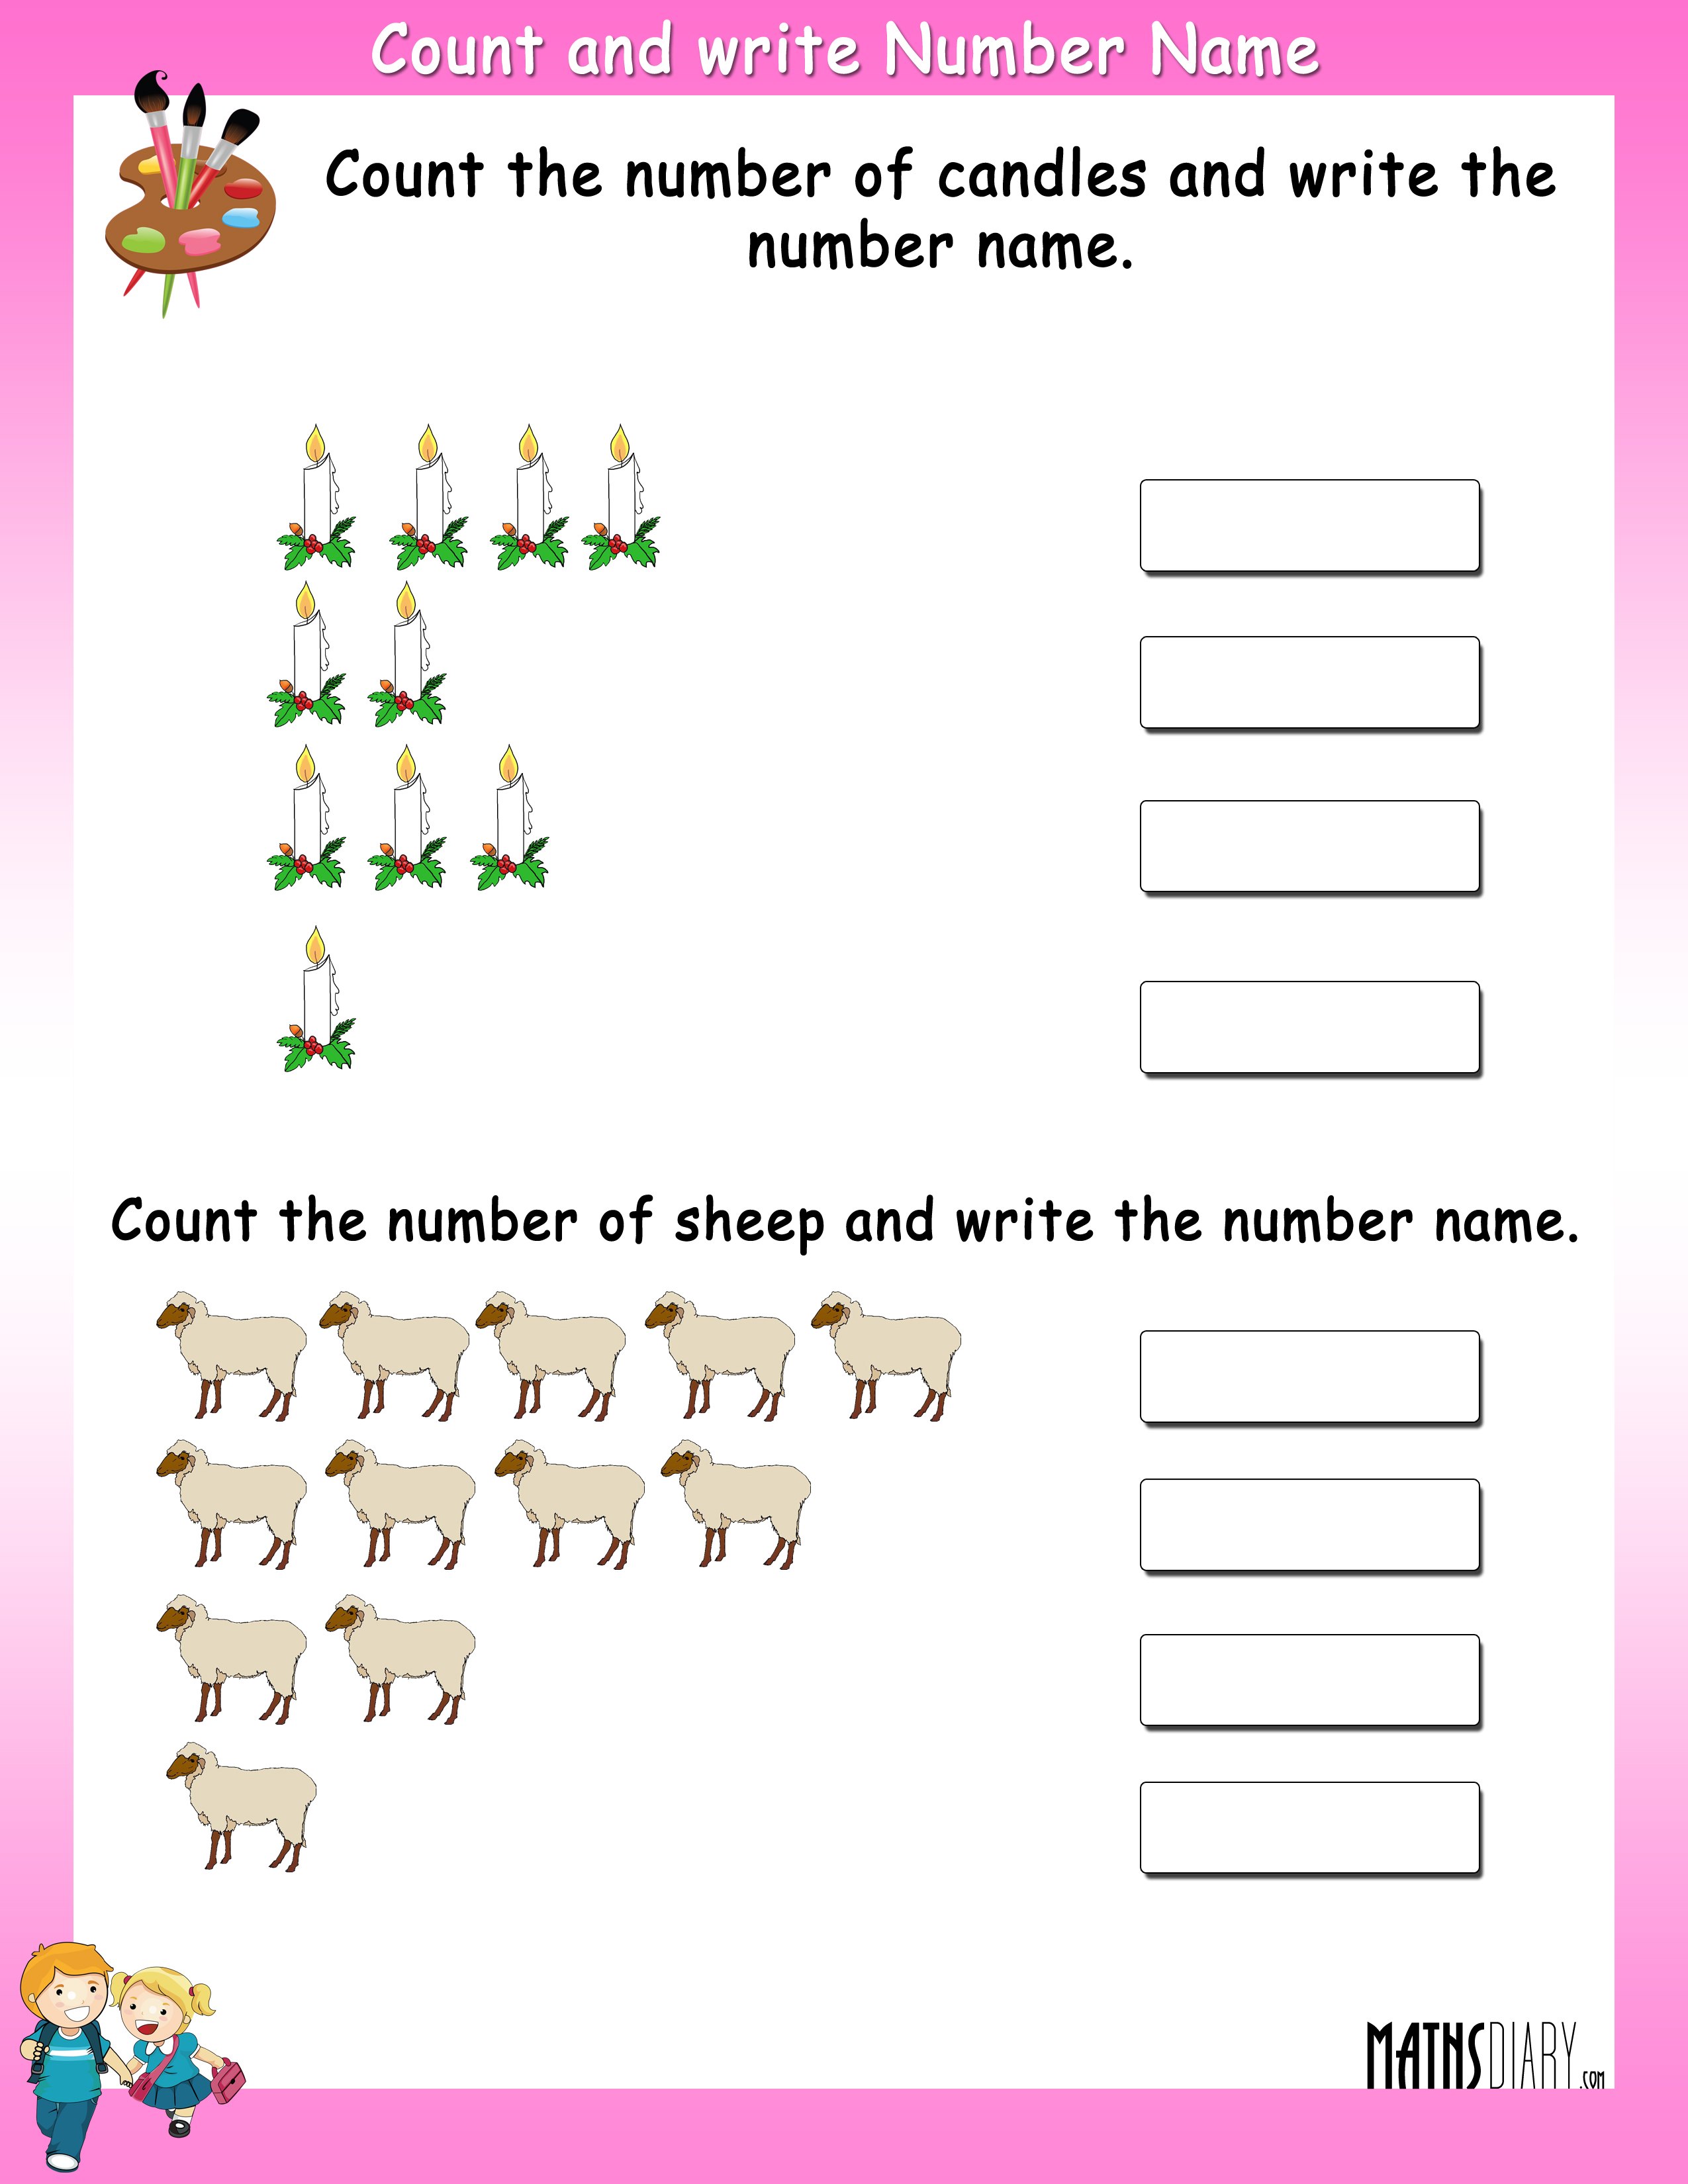 naming-numbers-grade-1-math-worksheets-page-2